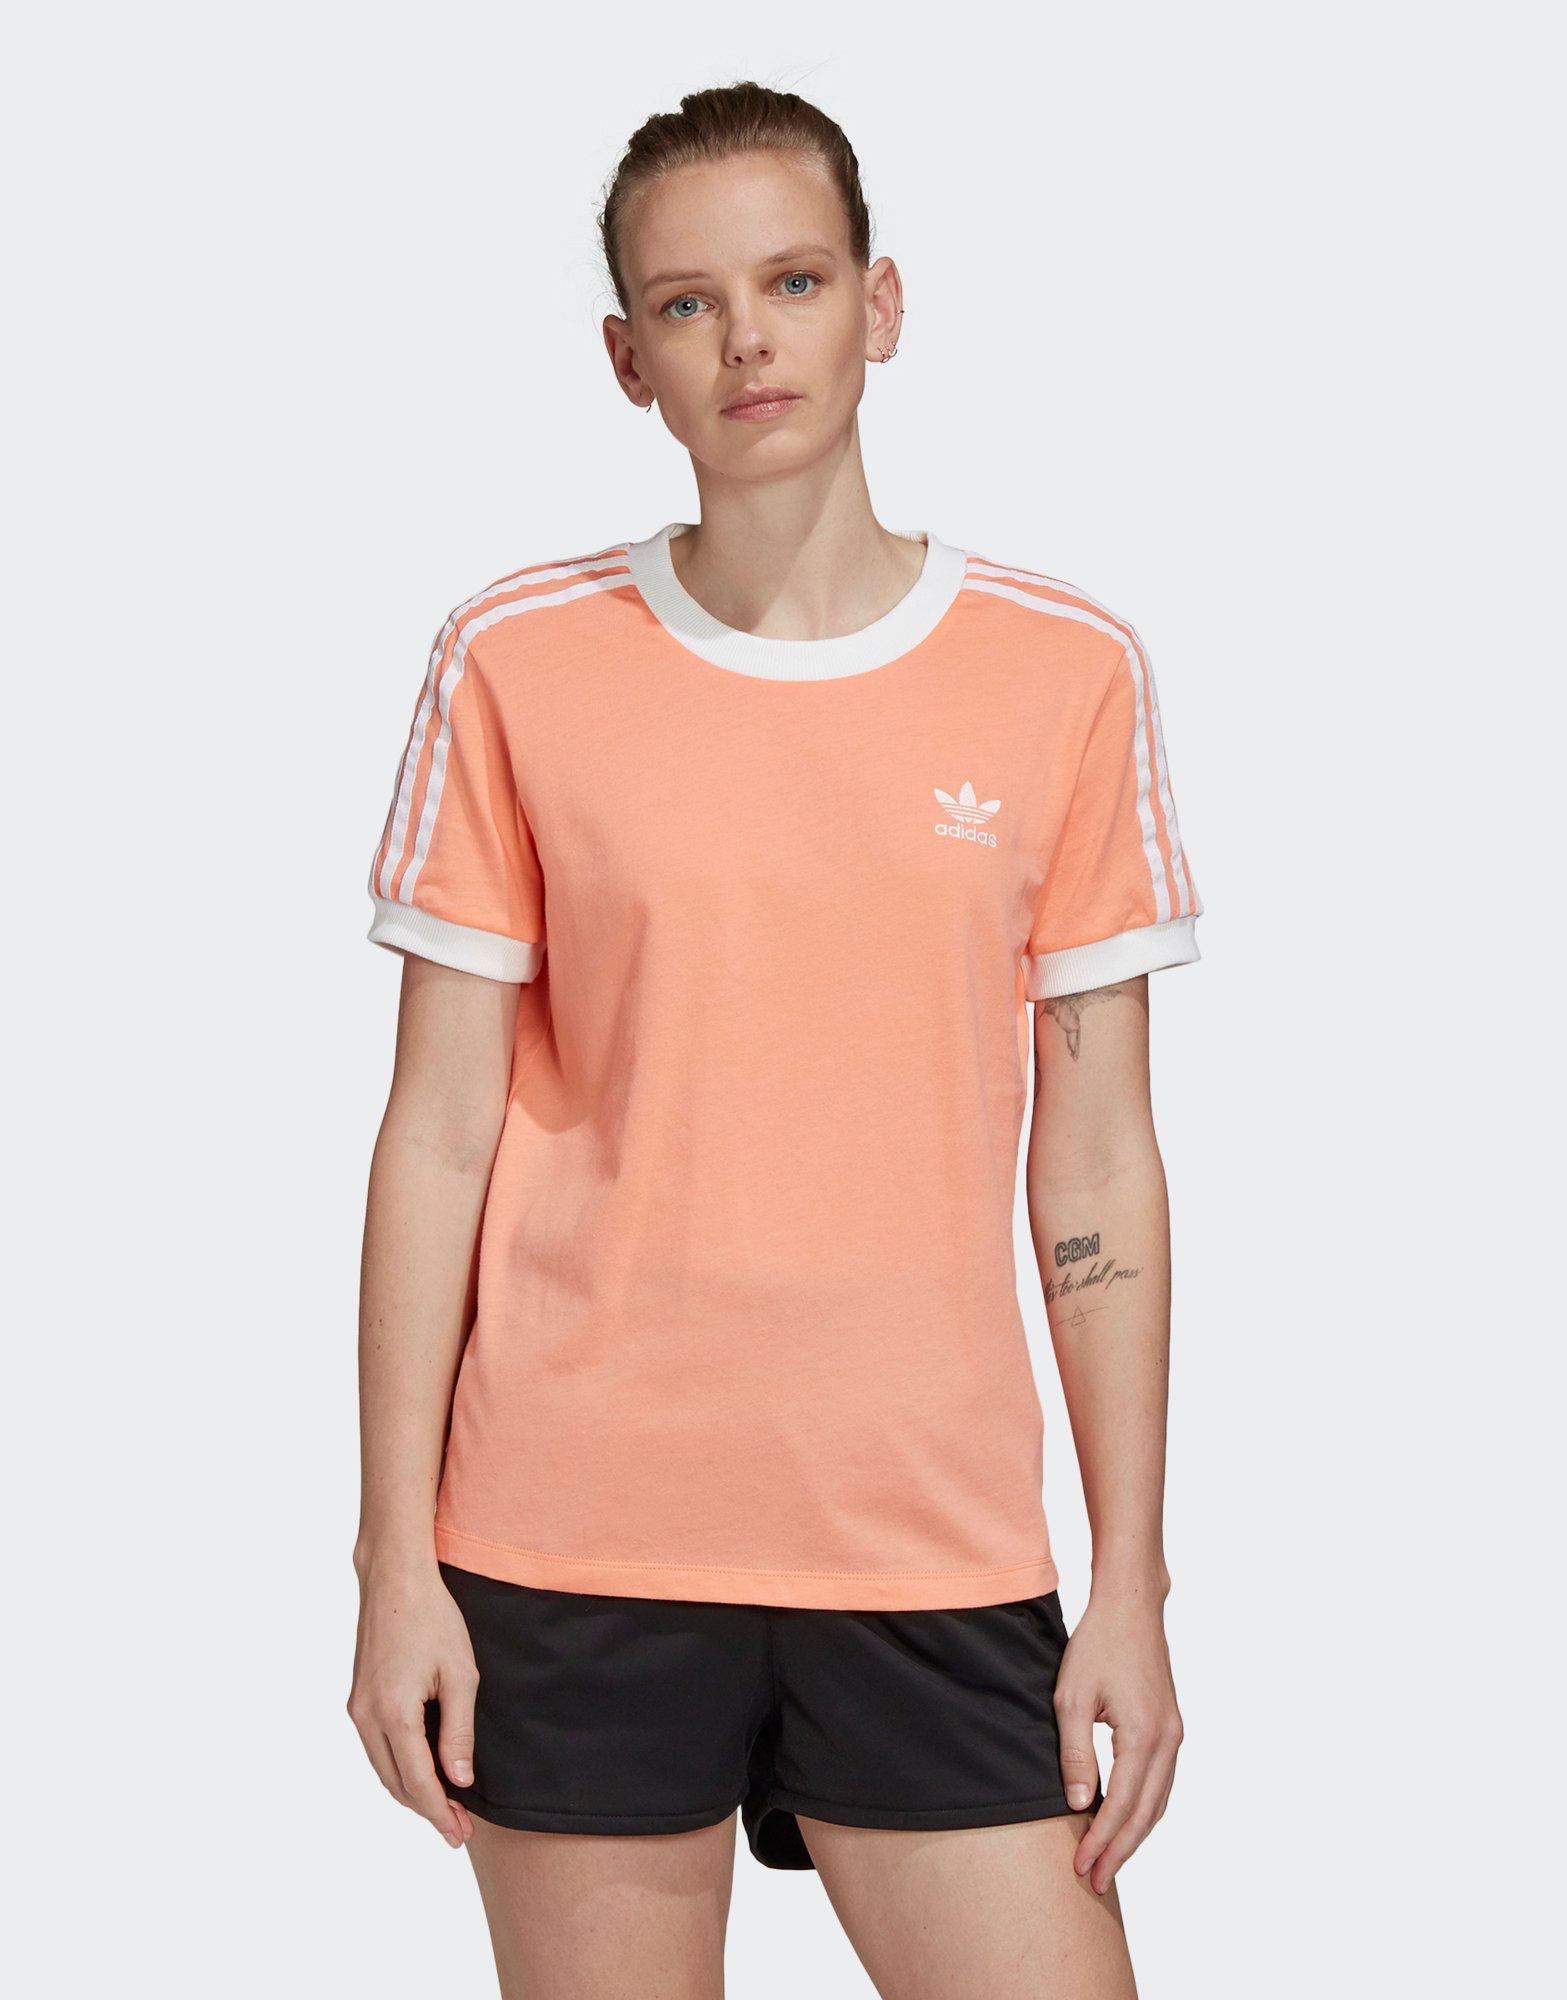 orange adidas t shirt women's